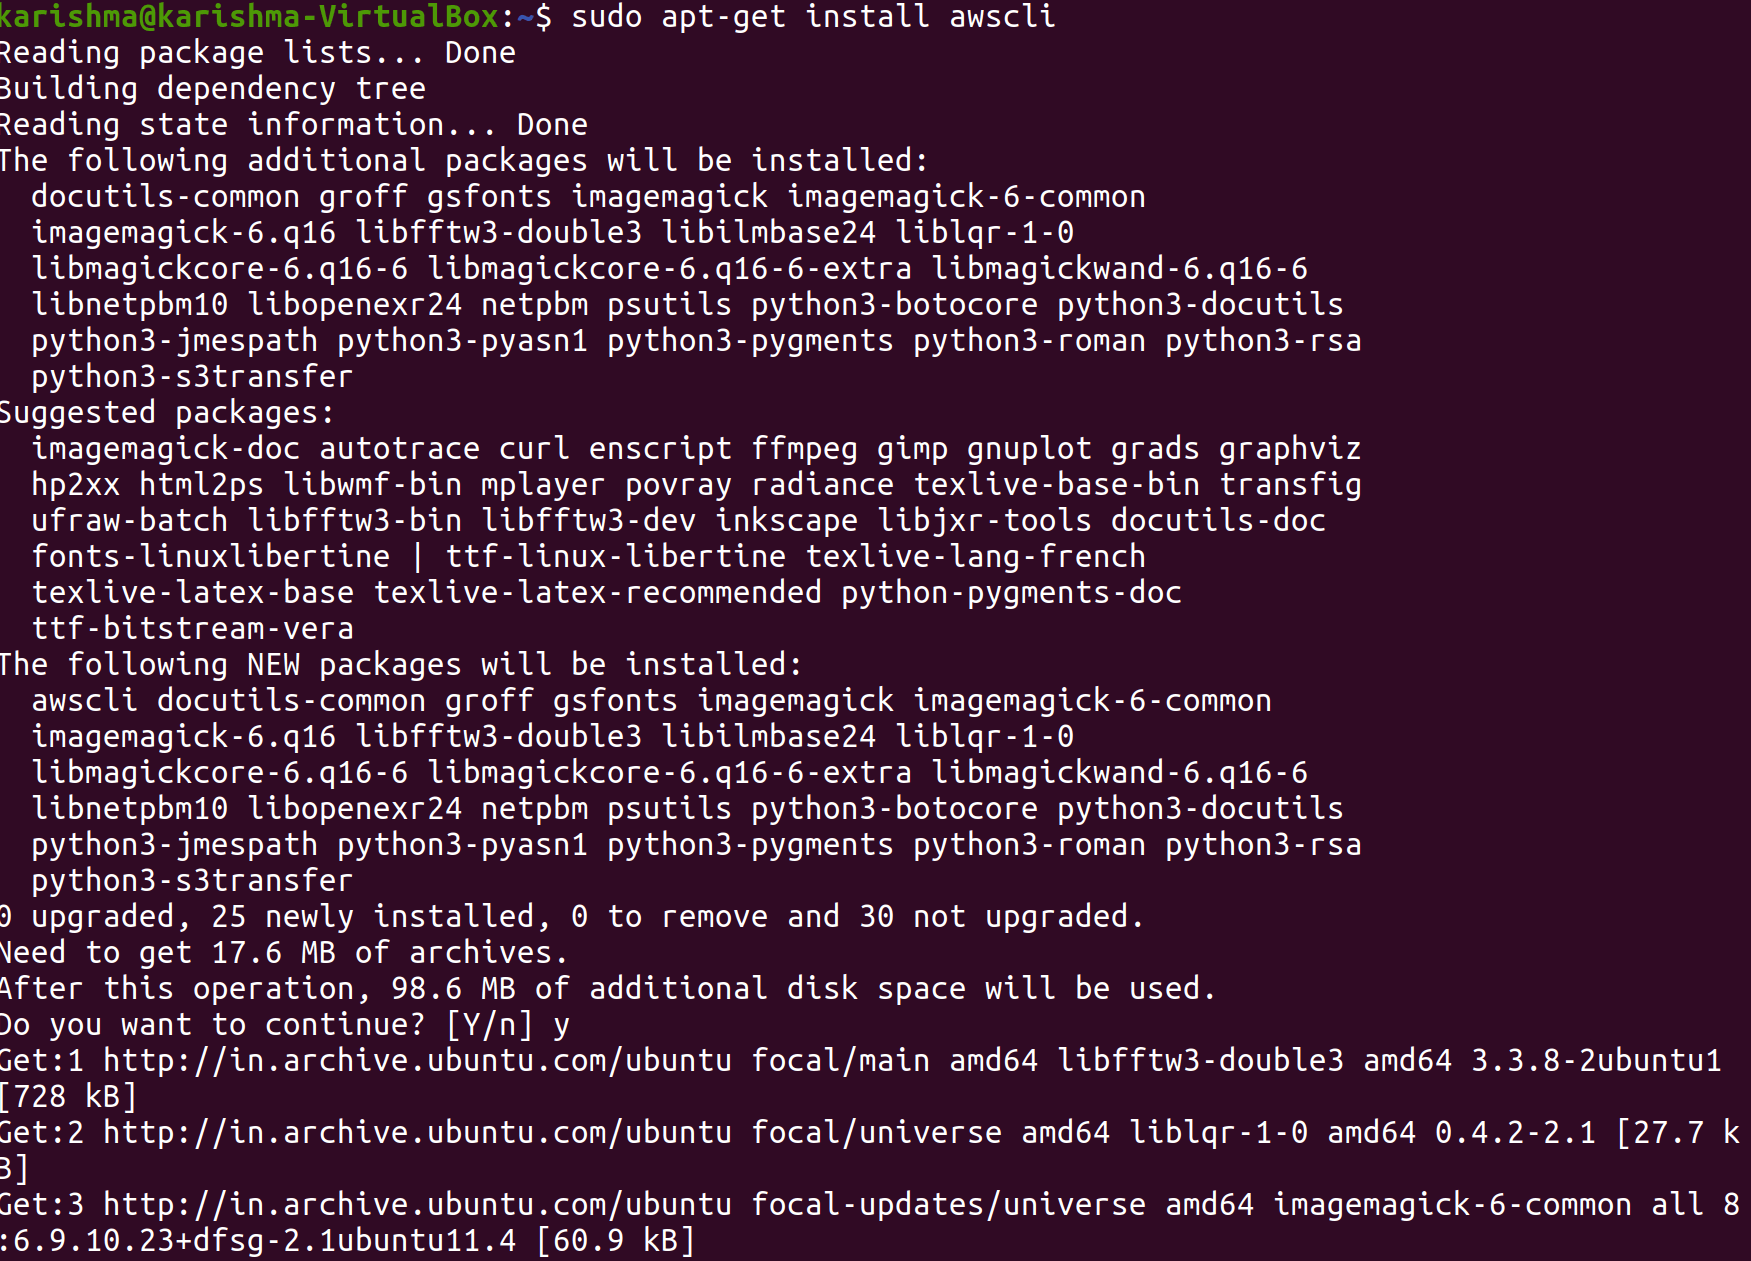 Install AWS CLI Ubuntu